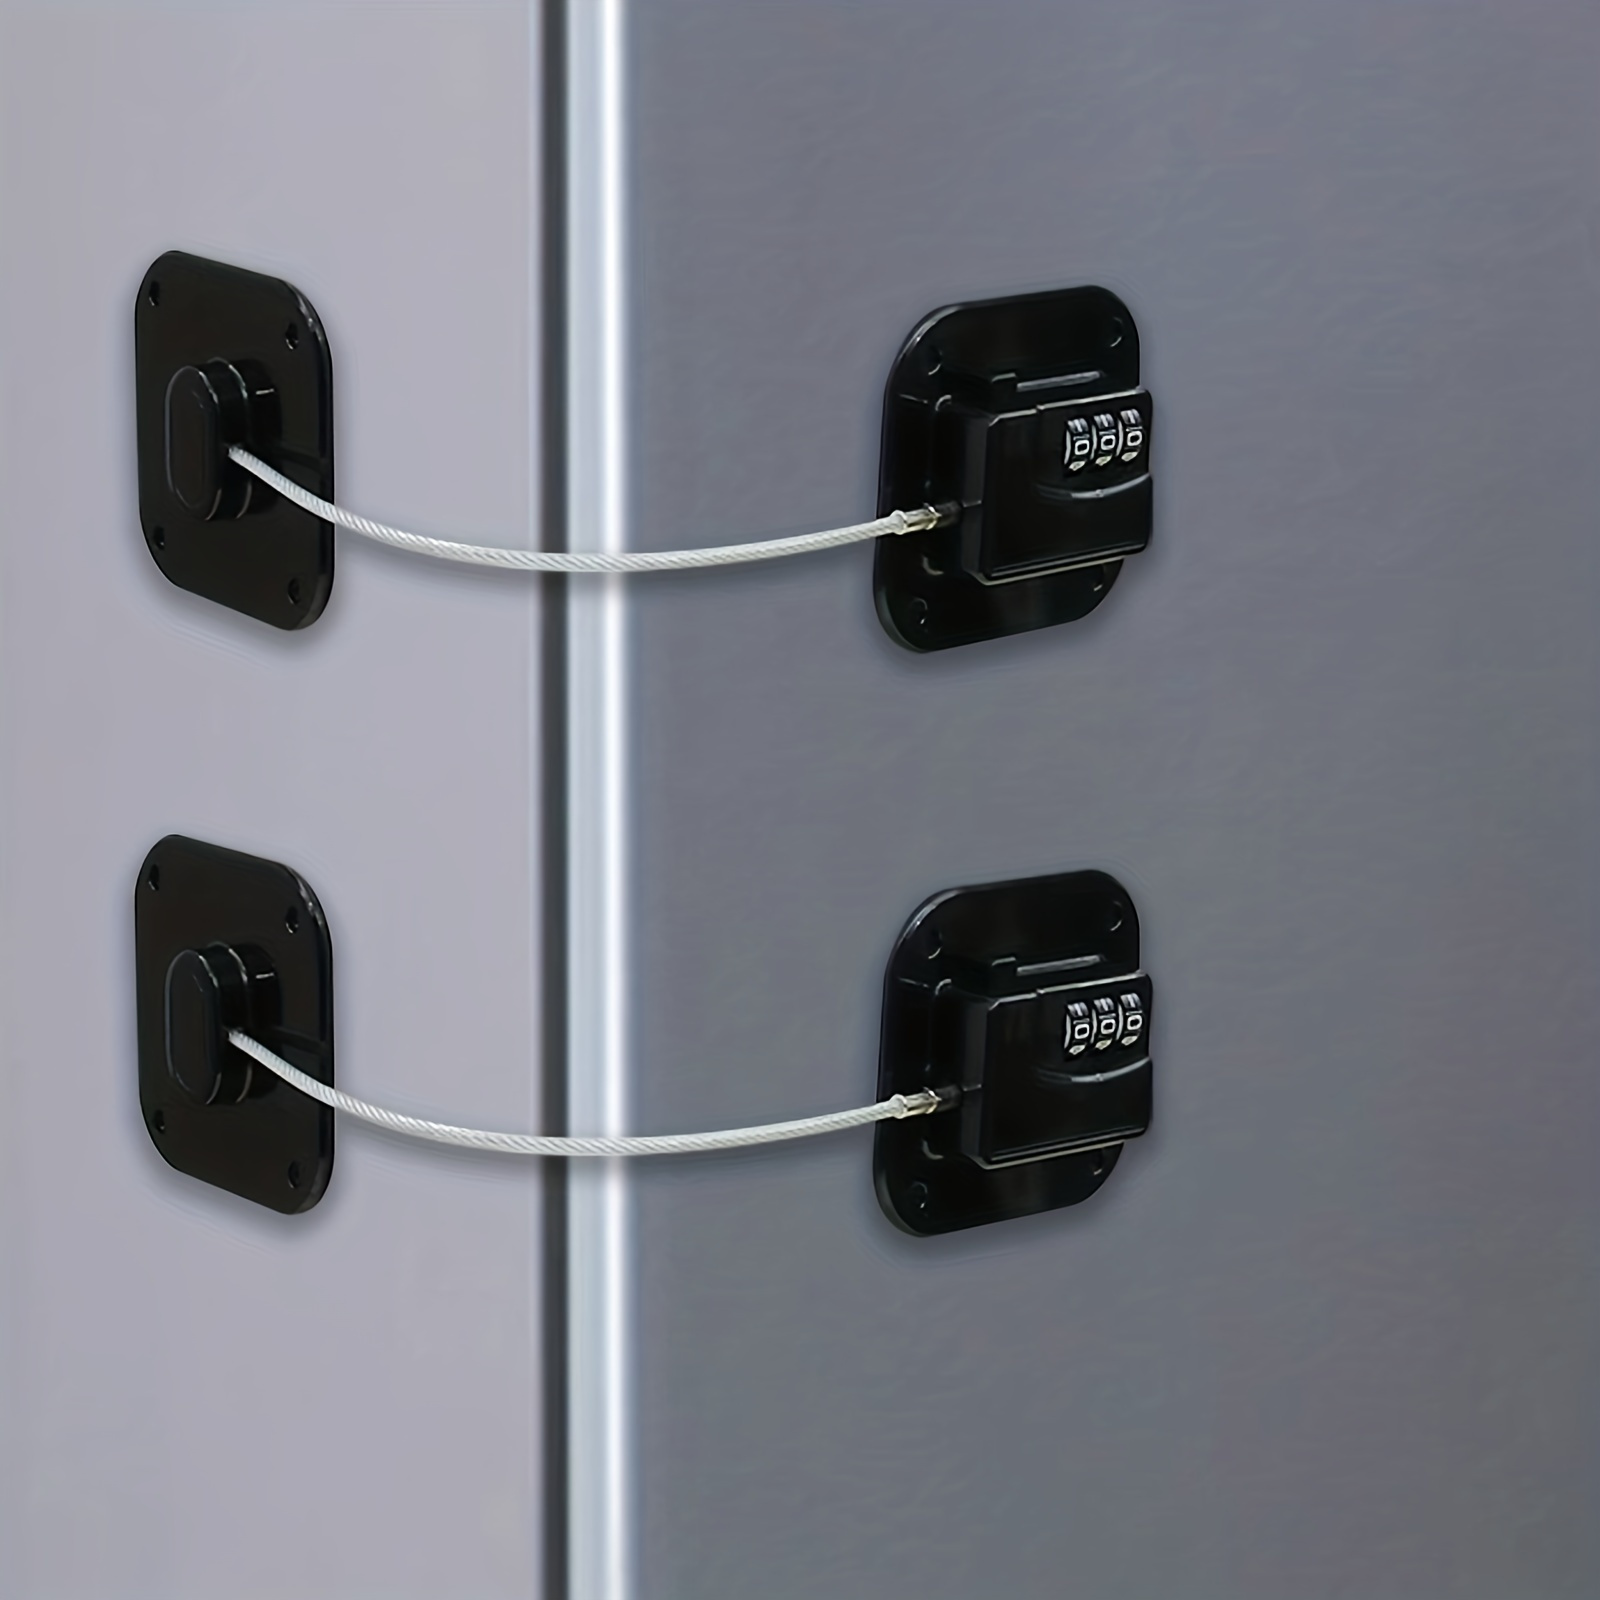 Fridge Lock,Refrigerator Locks,Freezer Lock with Key for Child Safety,Locks  to Lock Fridge and Cabinets-1Pack